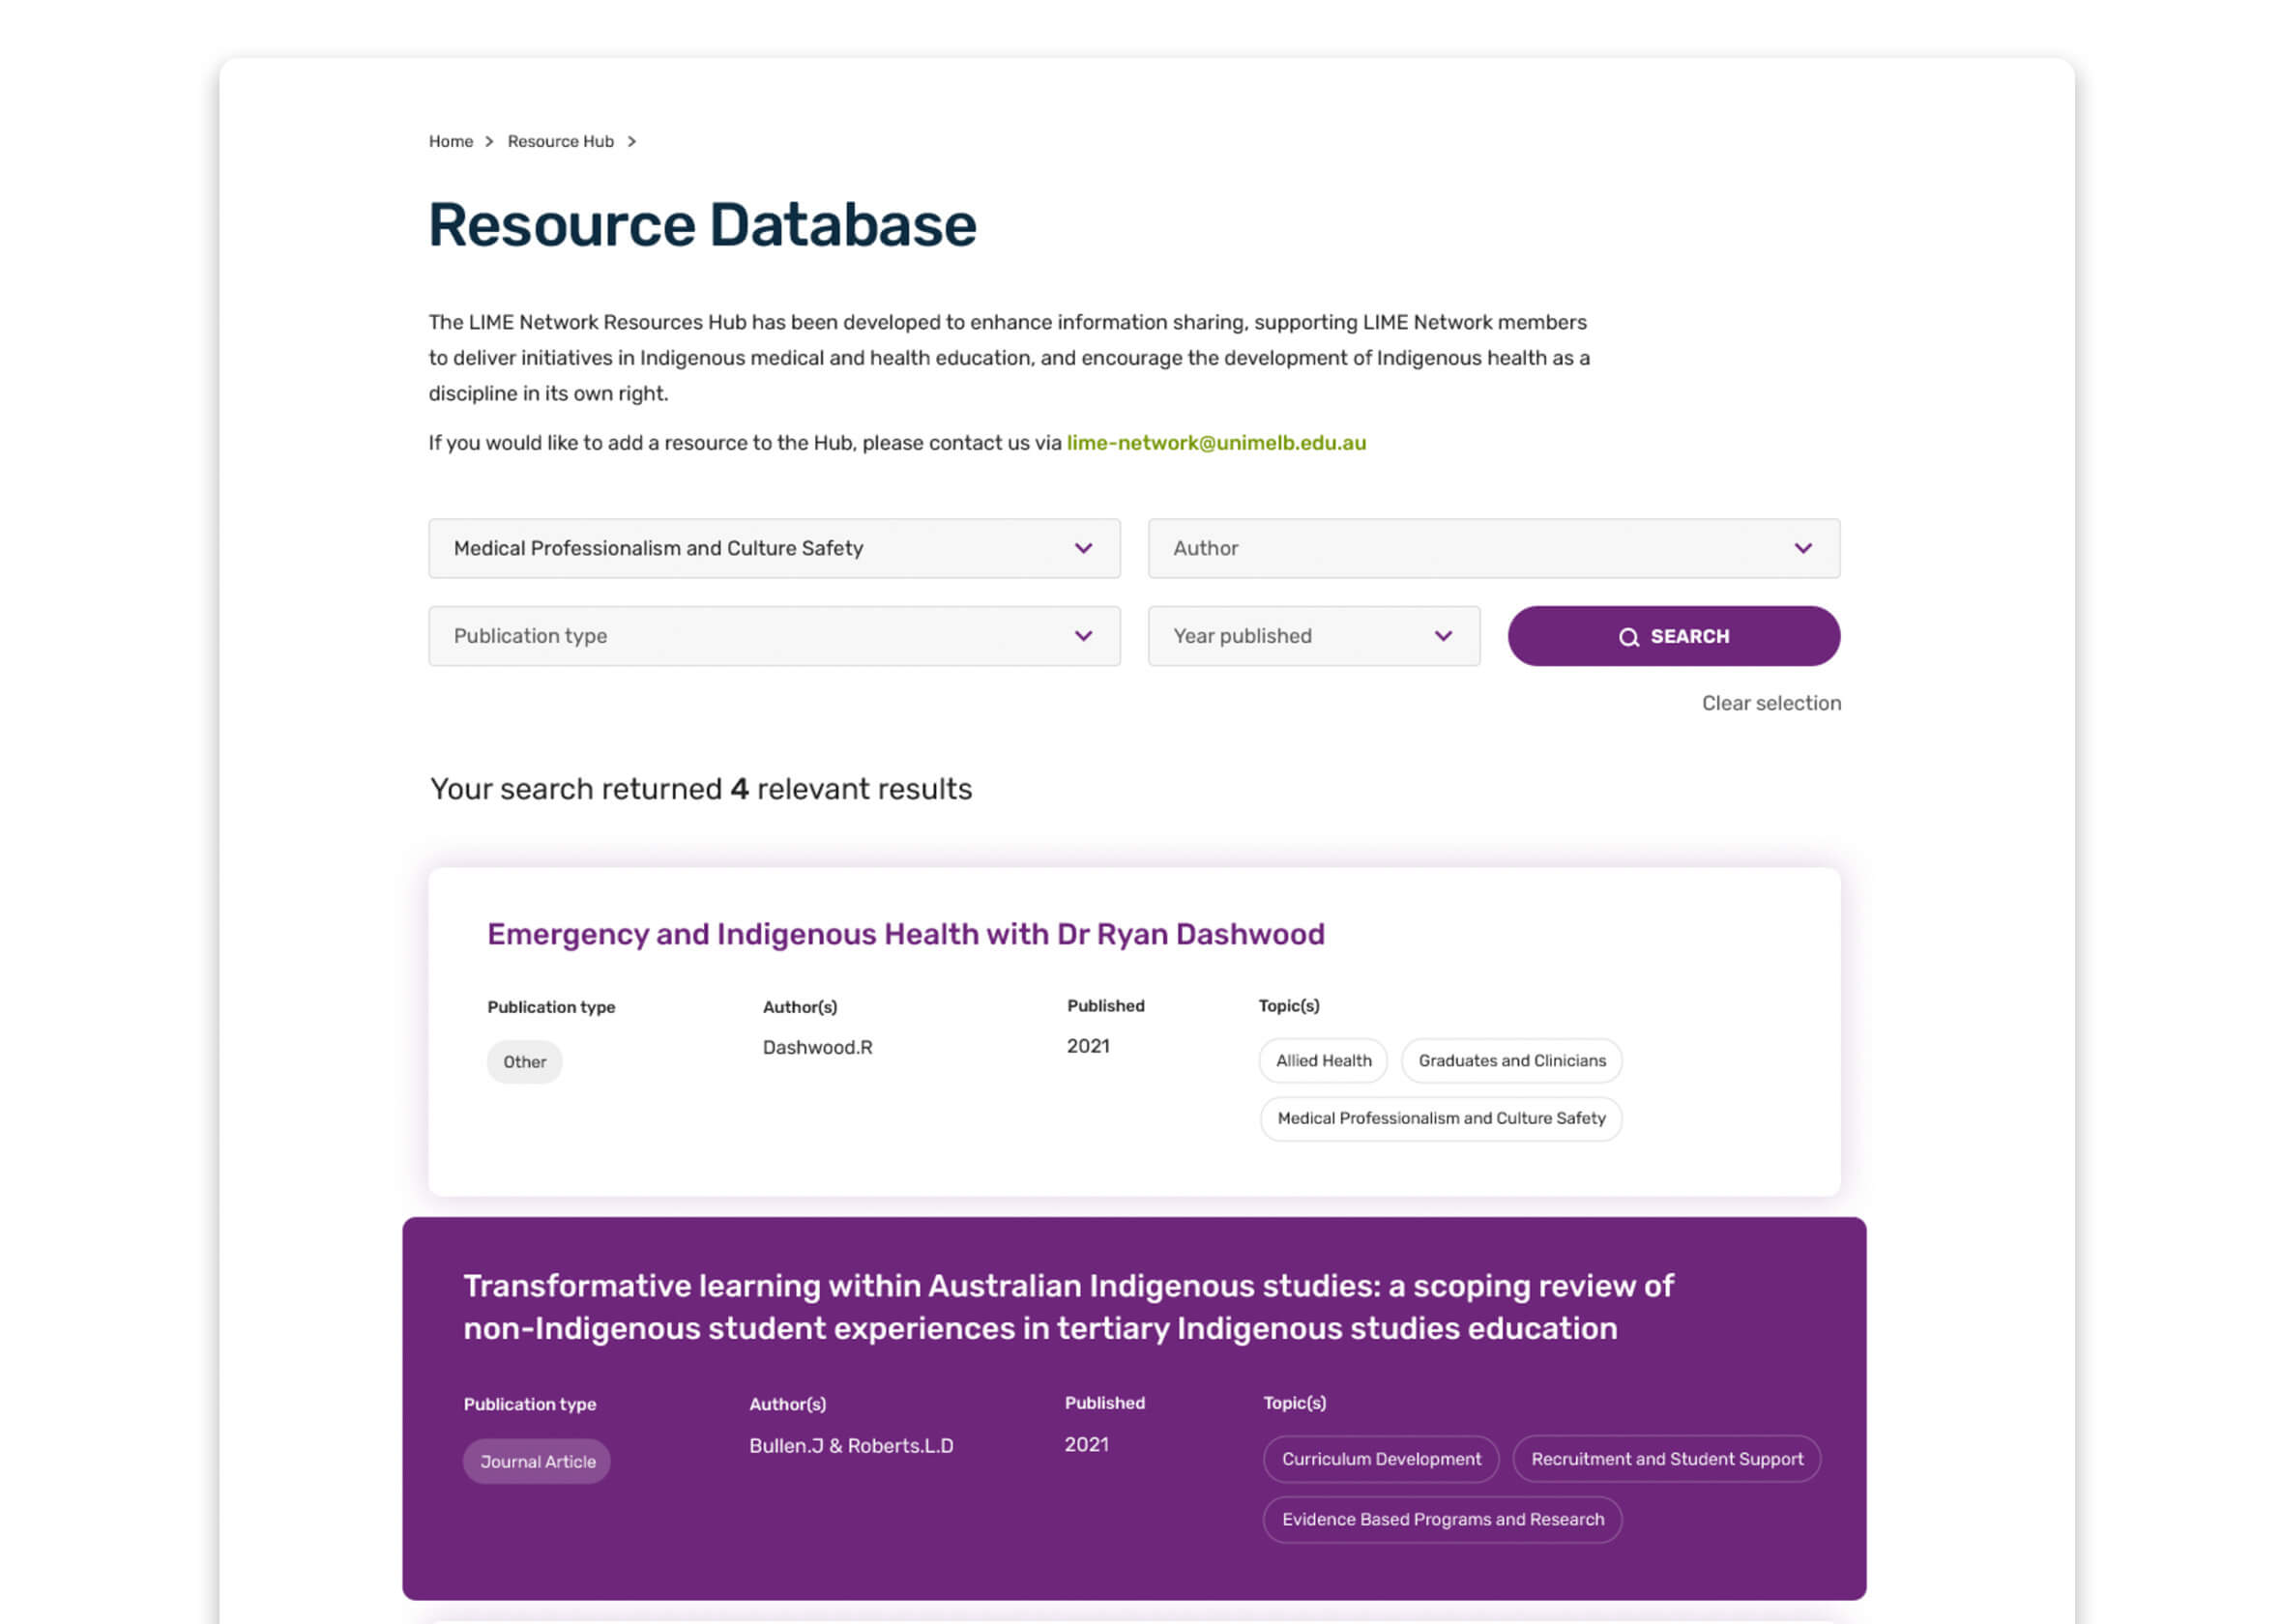 5. Resource Database